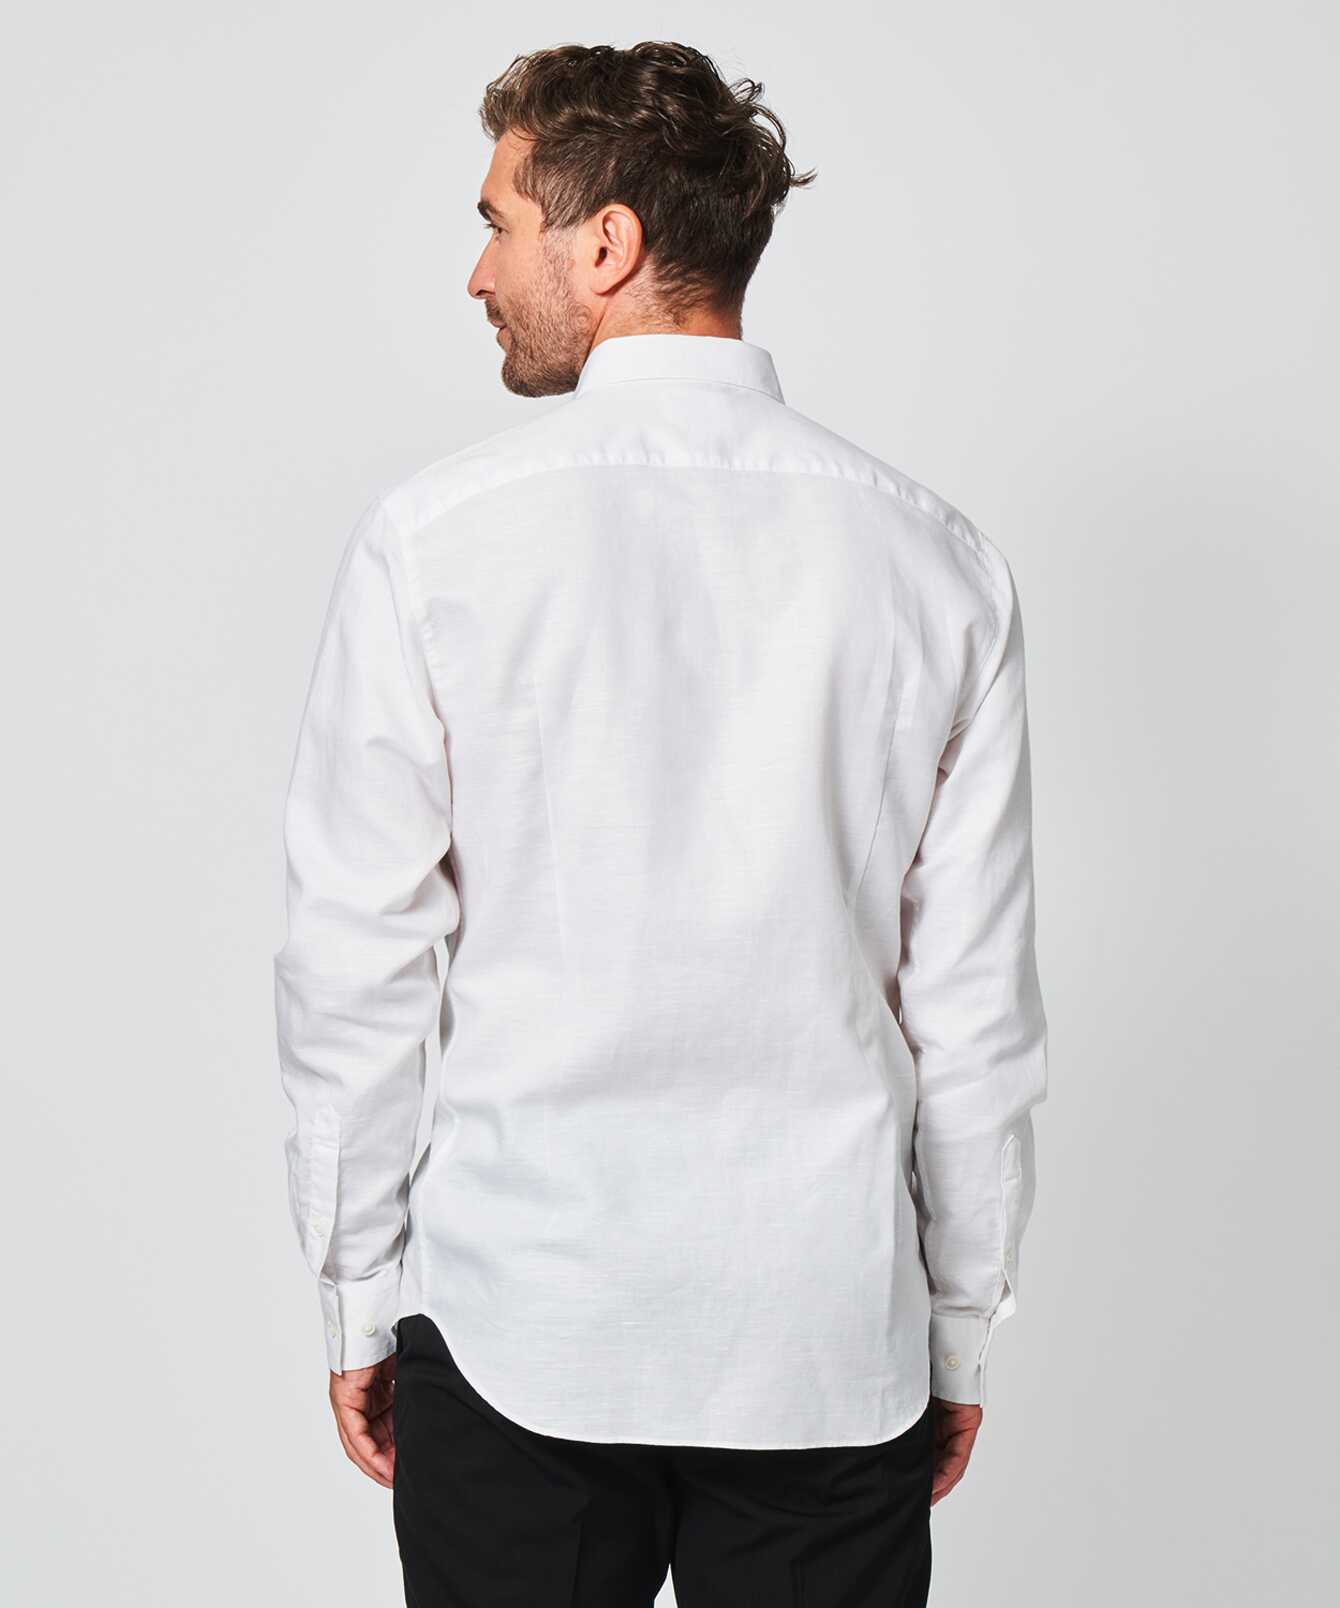 Shirt Portofino White Linen Shirt The Shirt Factory